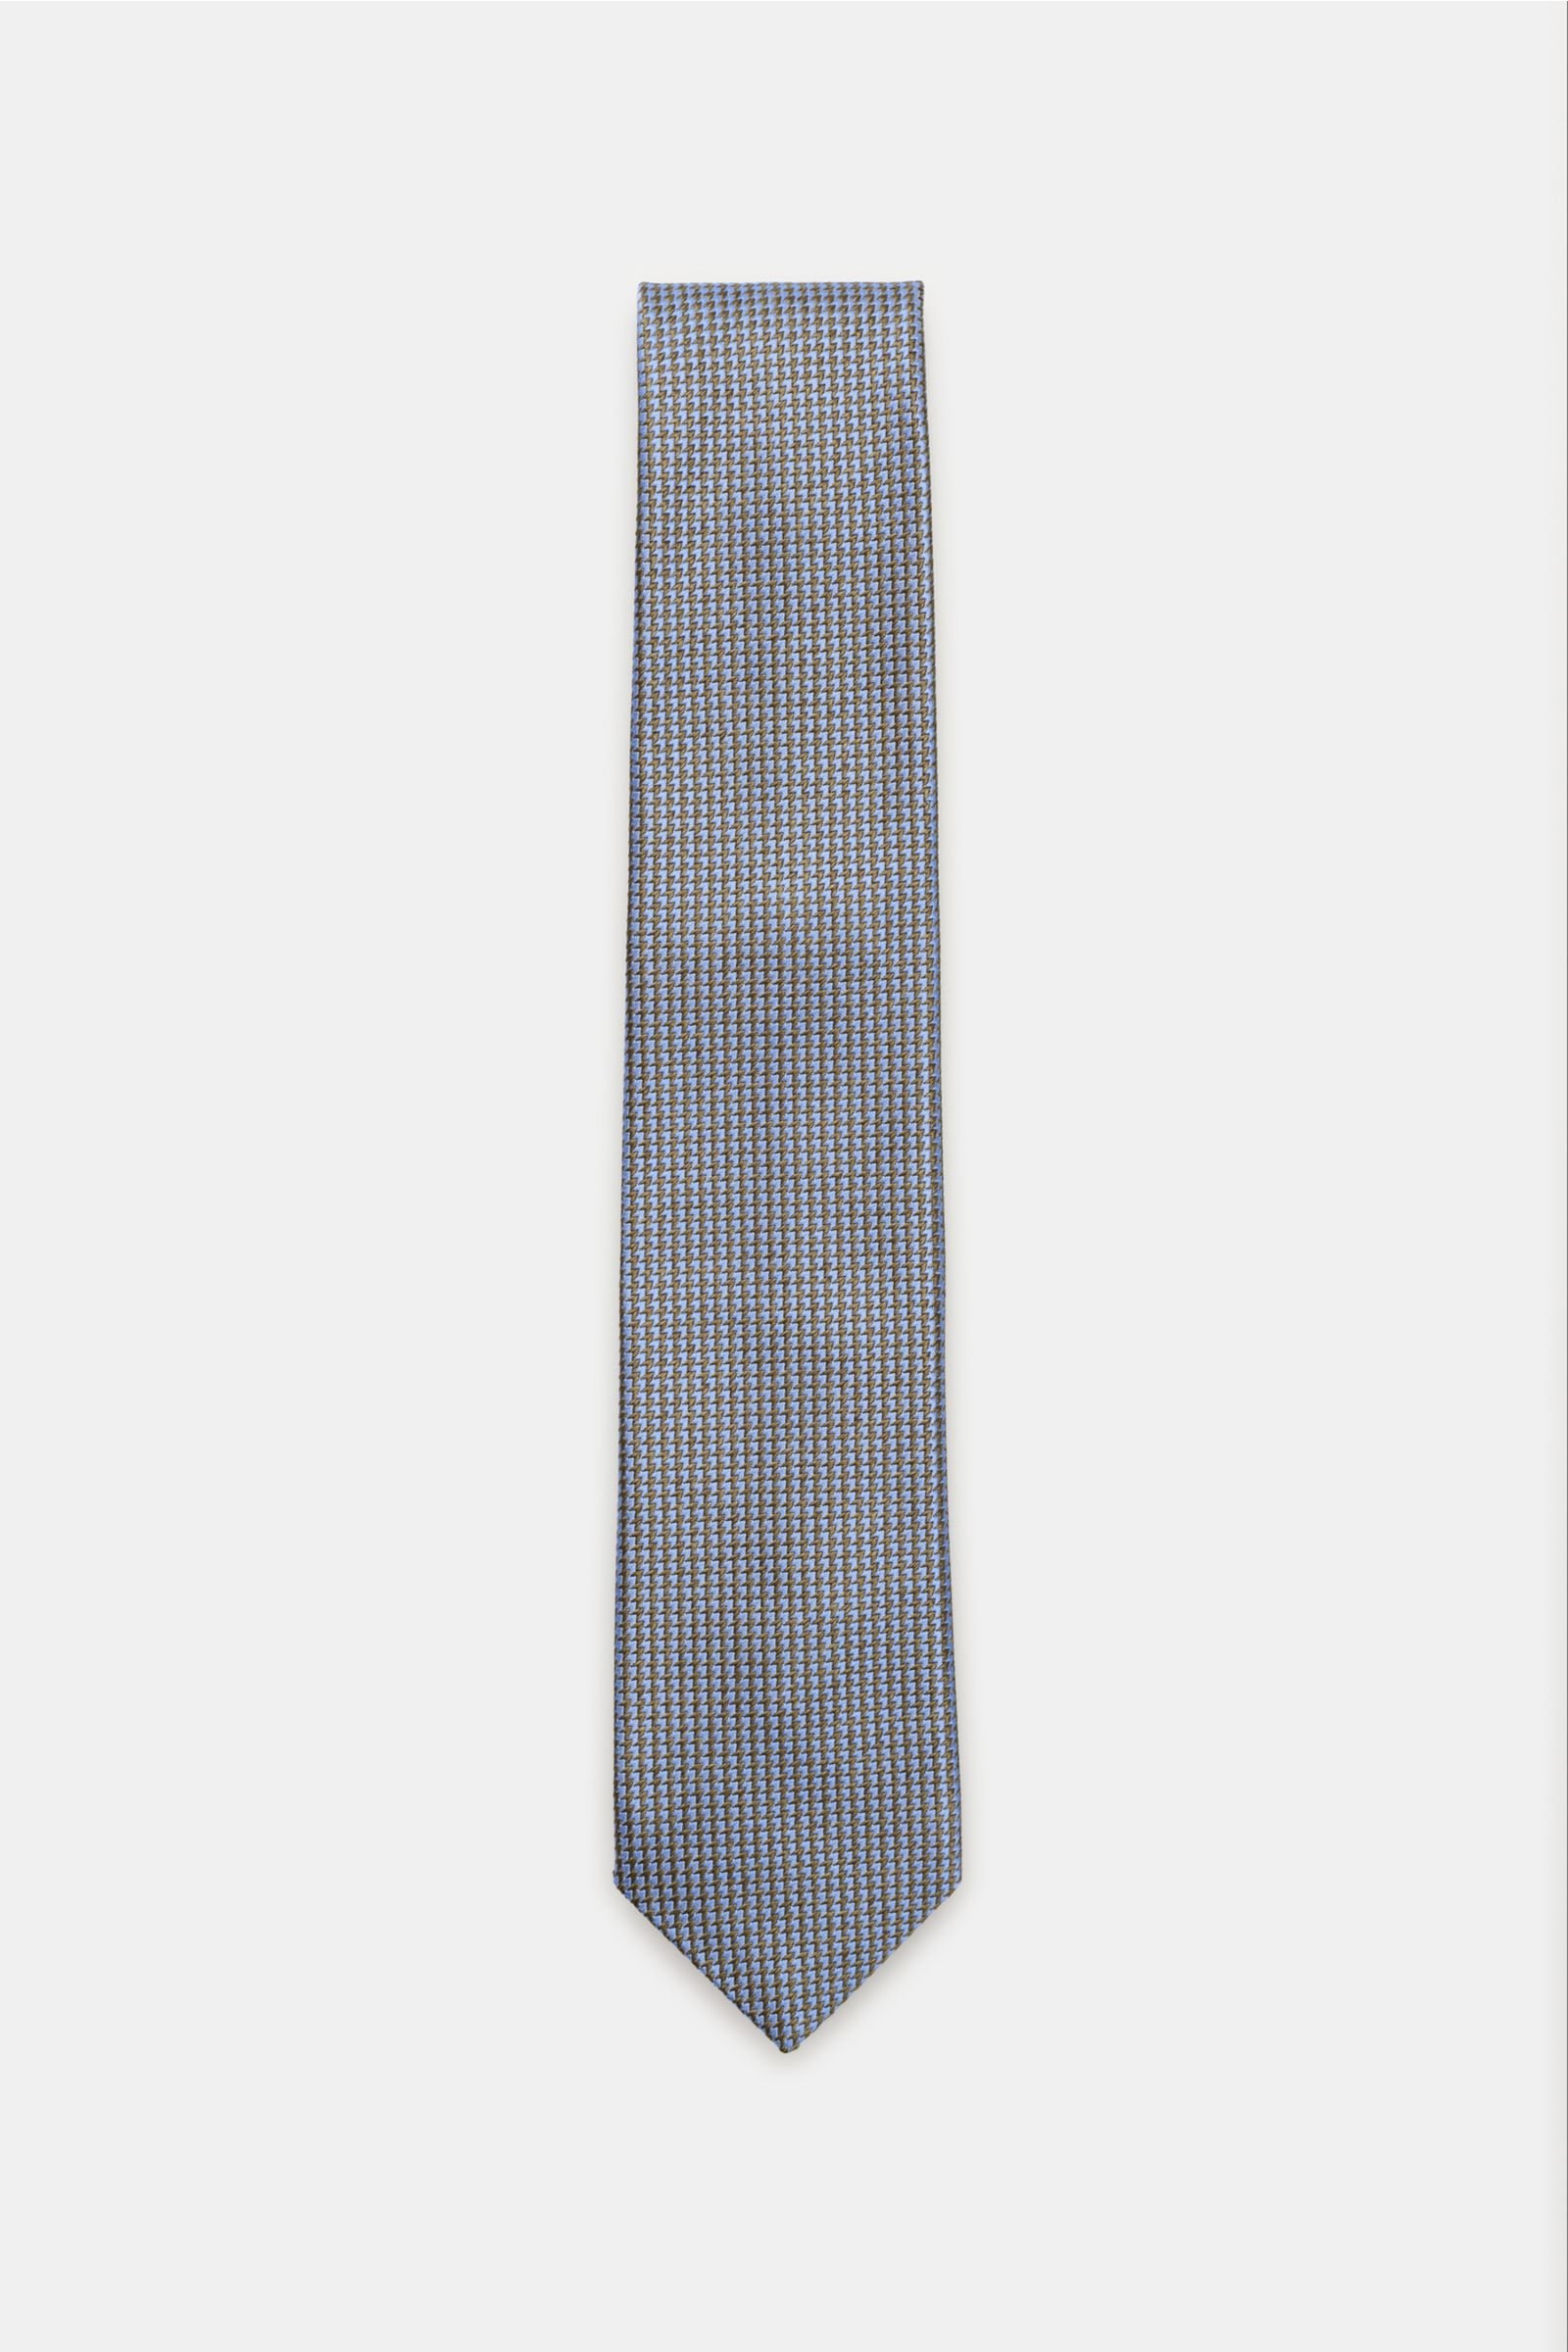 Krawatte rauchblau/oliv gemustert